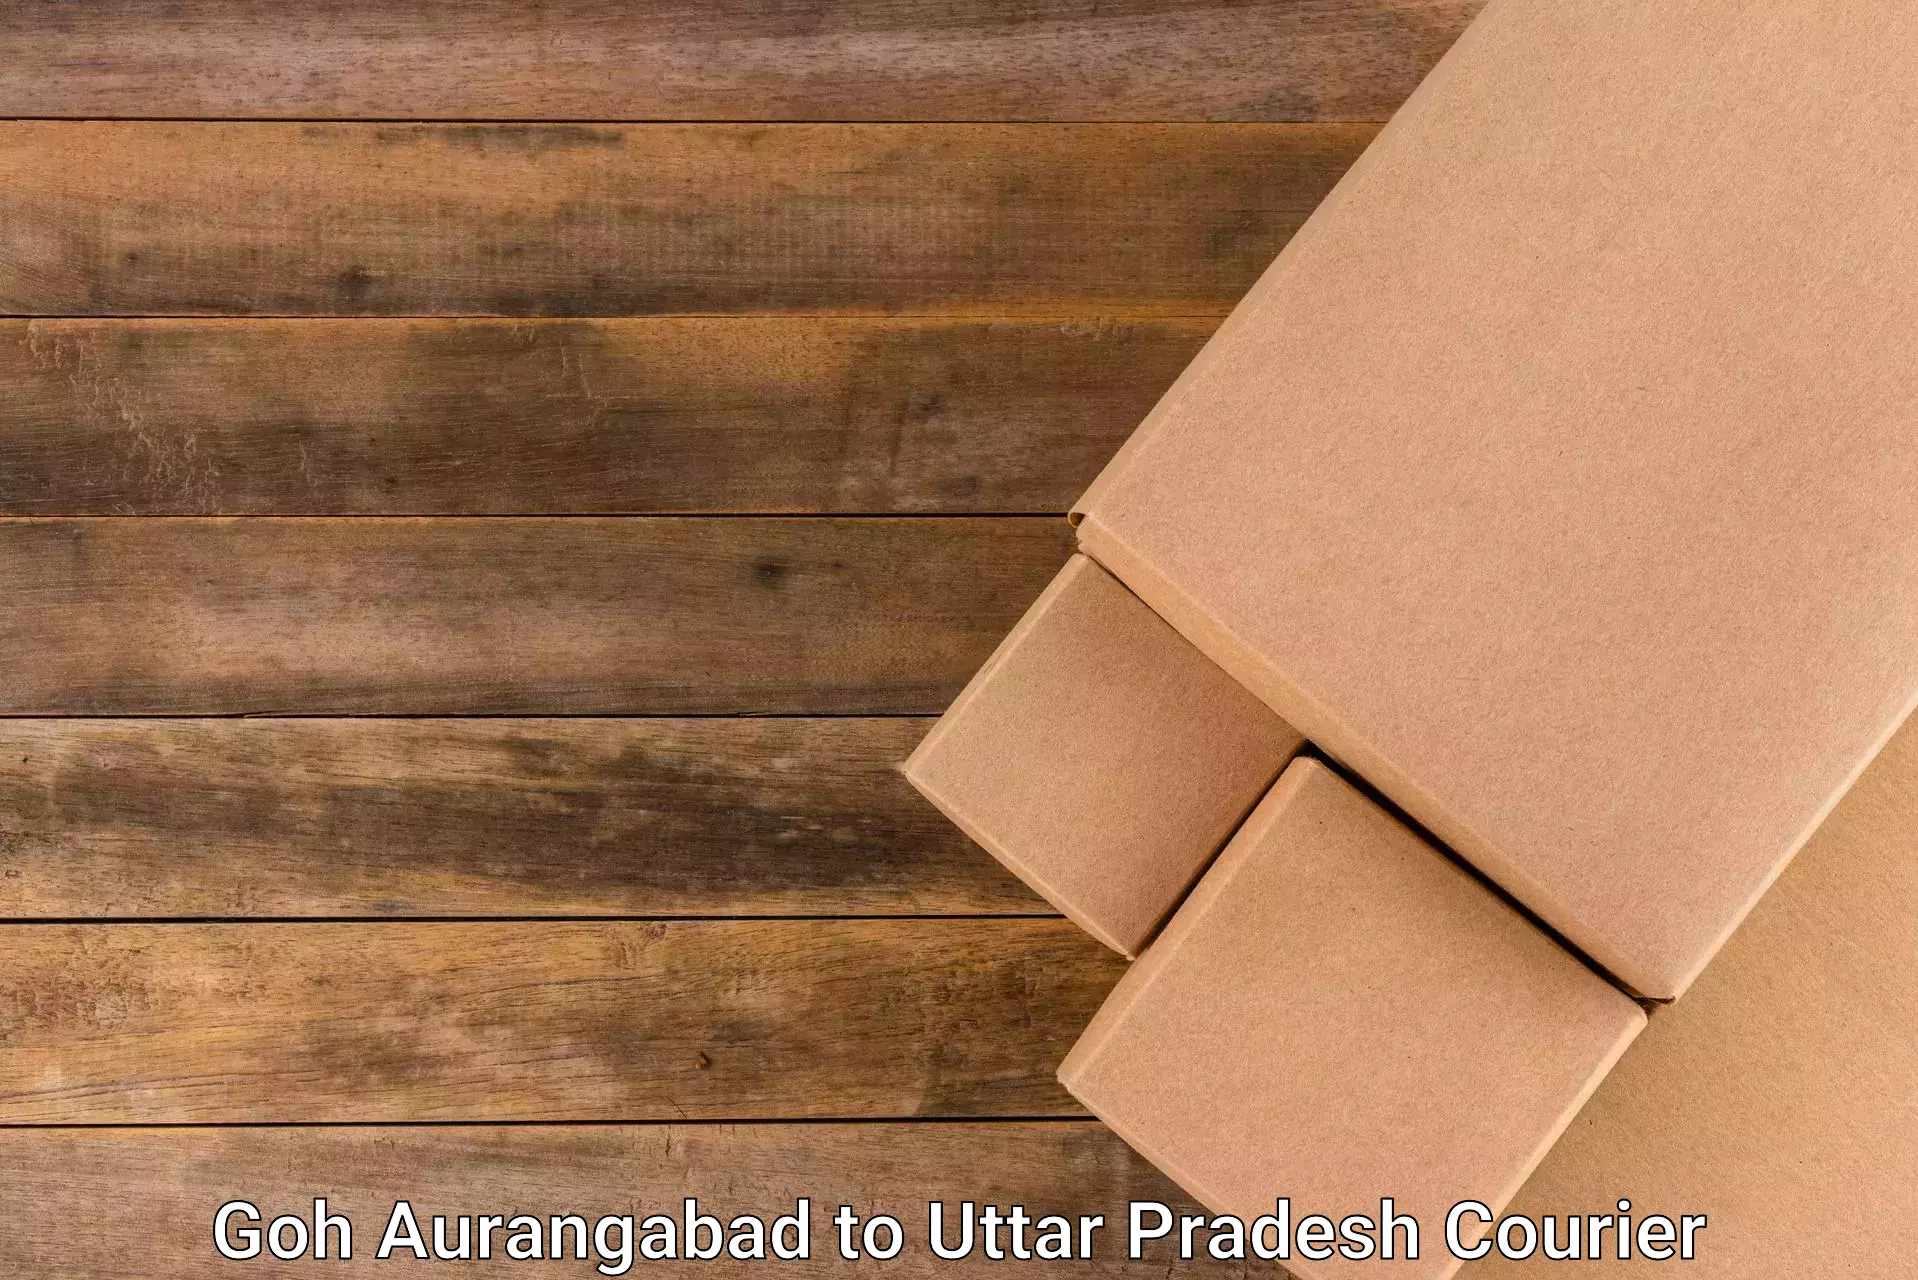 Efficient courier operations Goh Aurangabad to Chopan